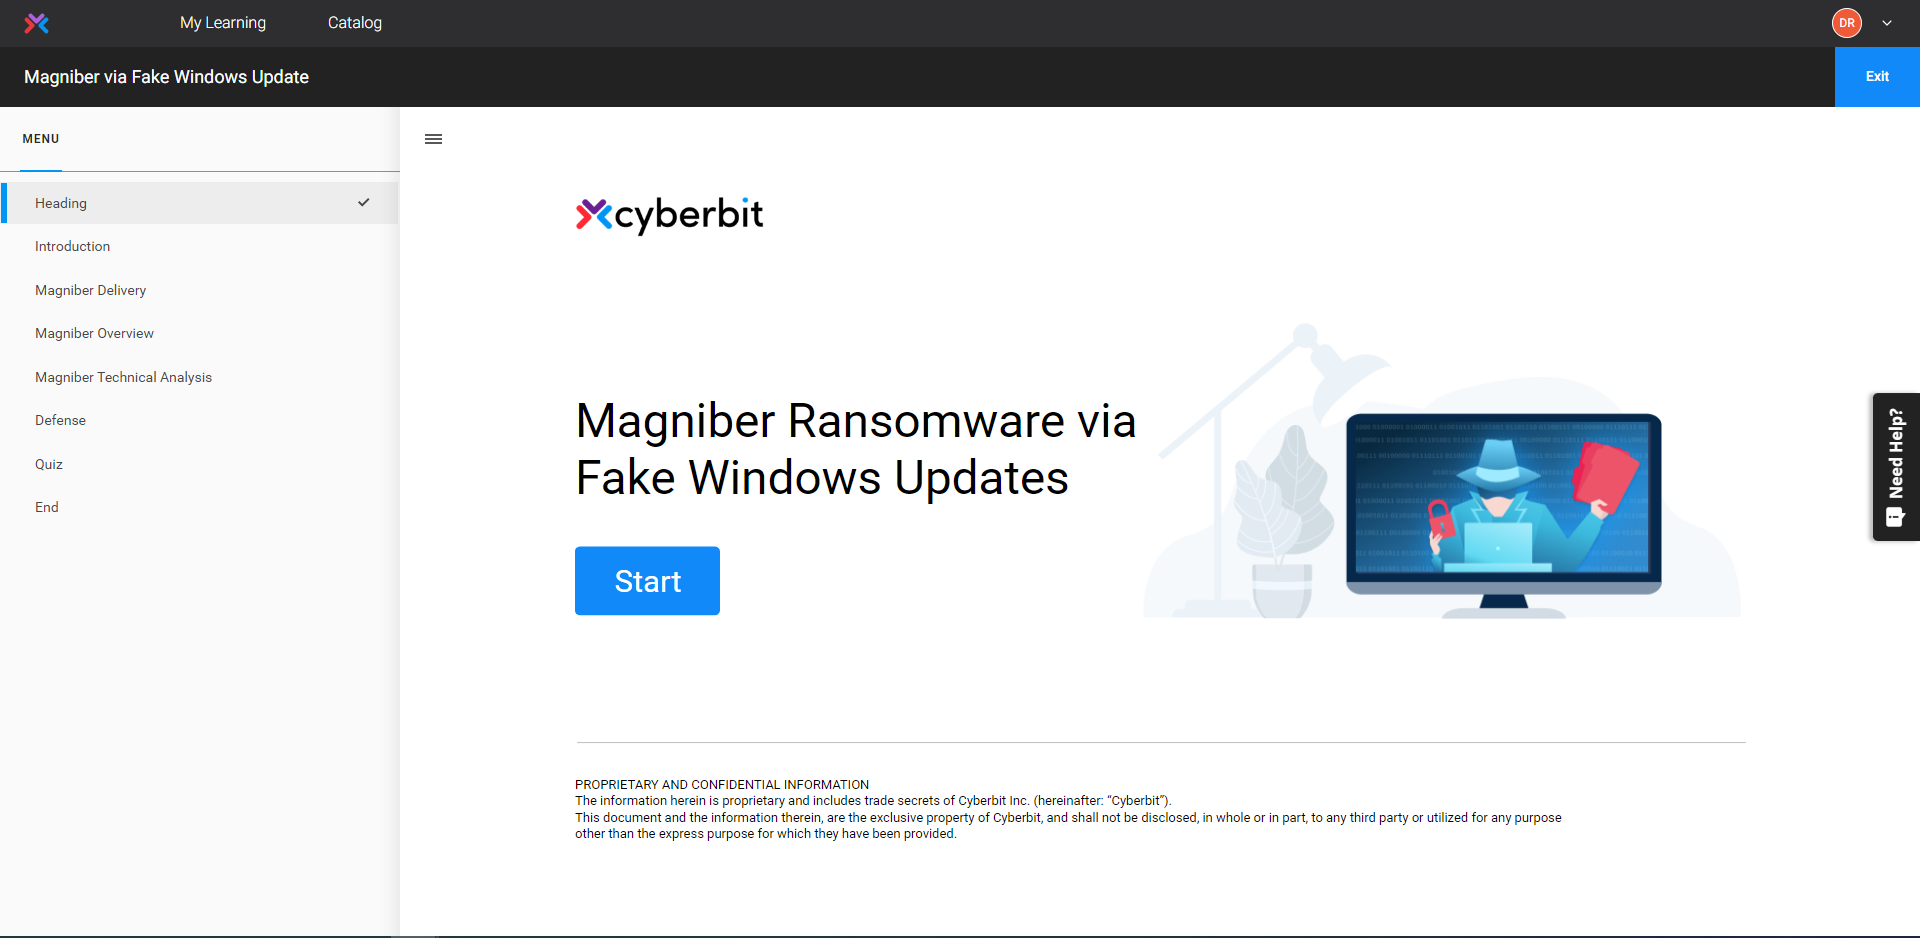 Magniber via fake Windows updates